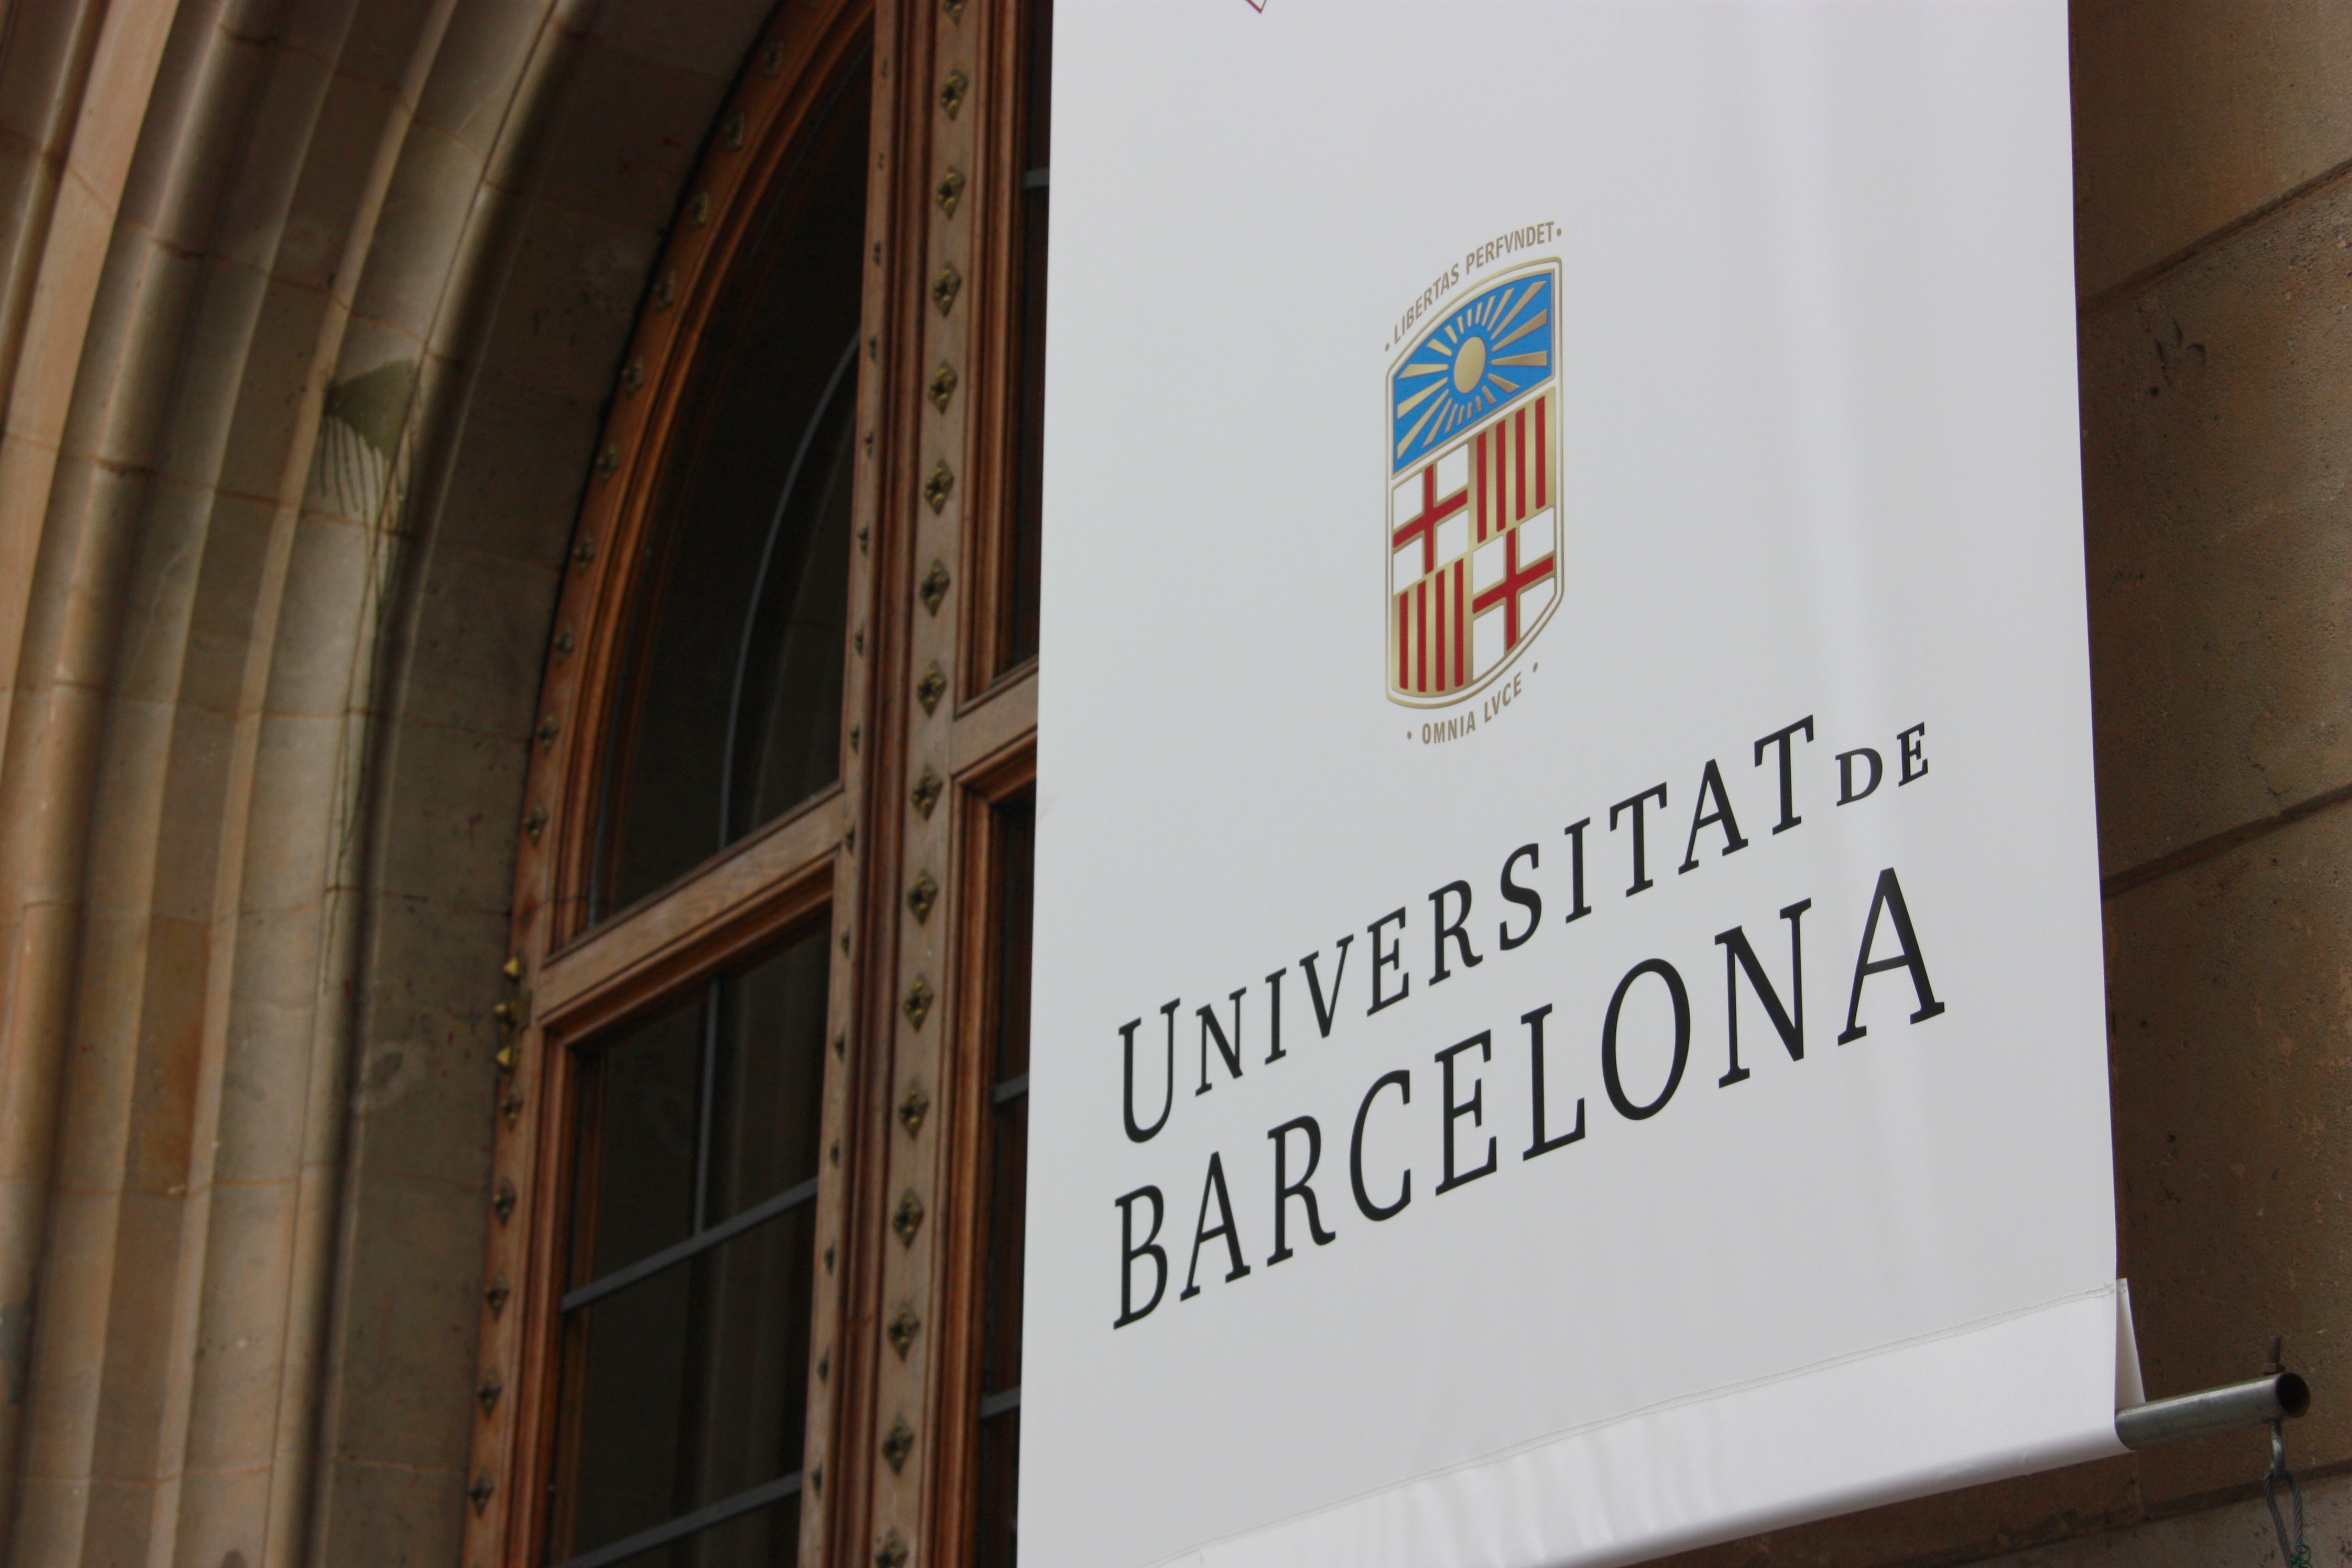 condena tsjc universitat de barcelona acn